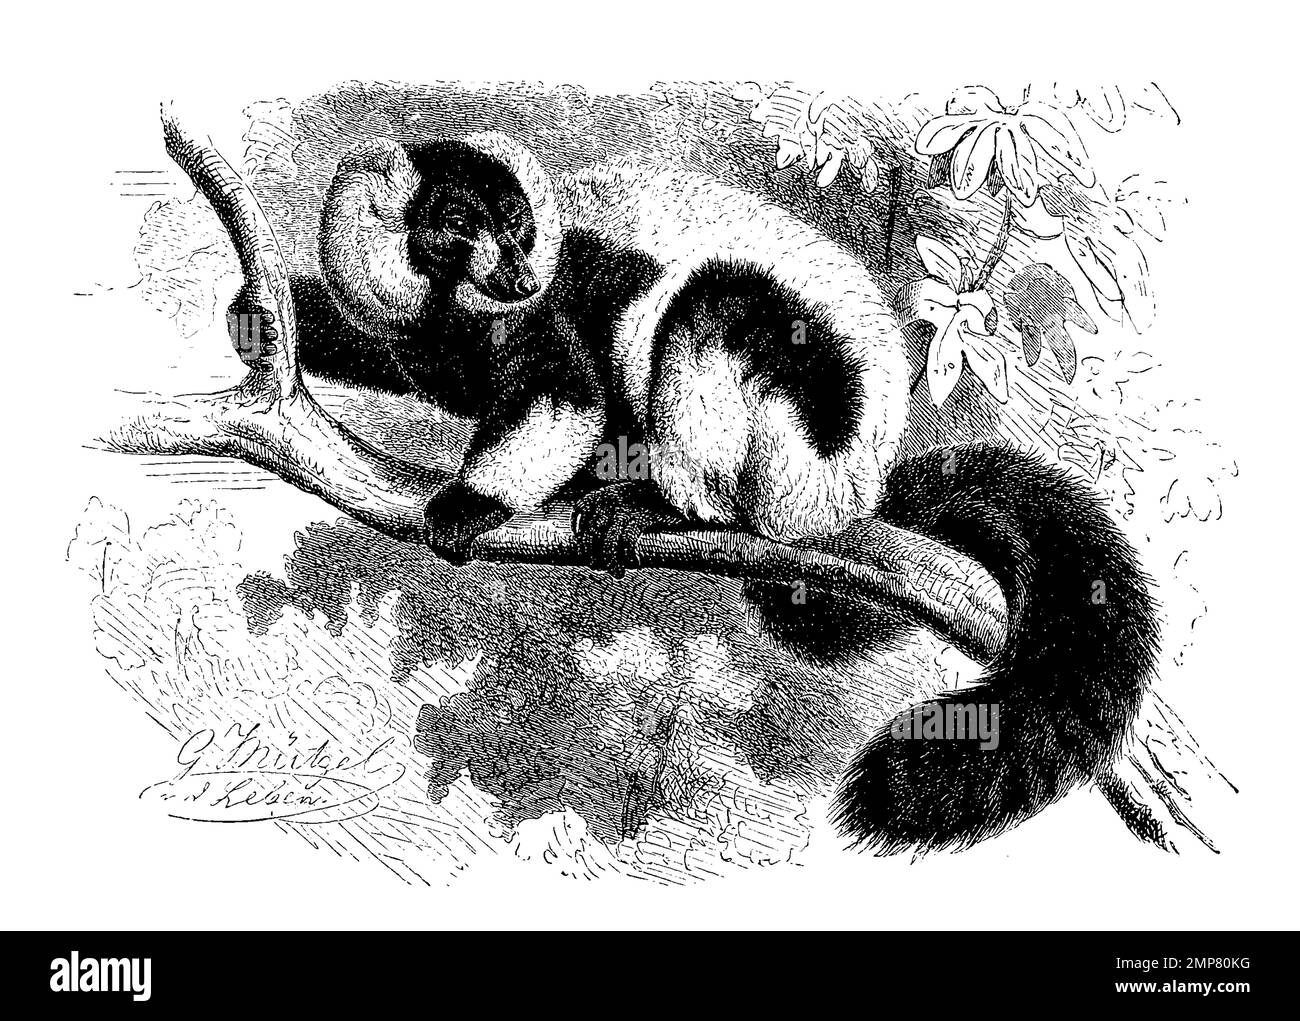 Vari, Lemur varius, Halbaffen, ristorante digitale Reproduktion einer Originalvorlage aus dem 19. Jahrhundert, genaues Originalatum nicht bekannt Foto Stock